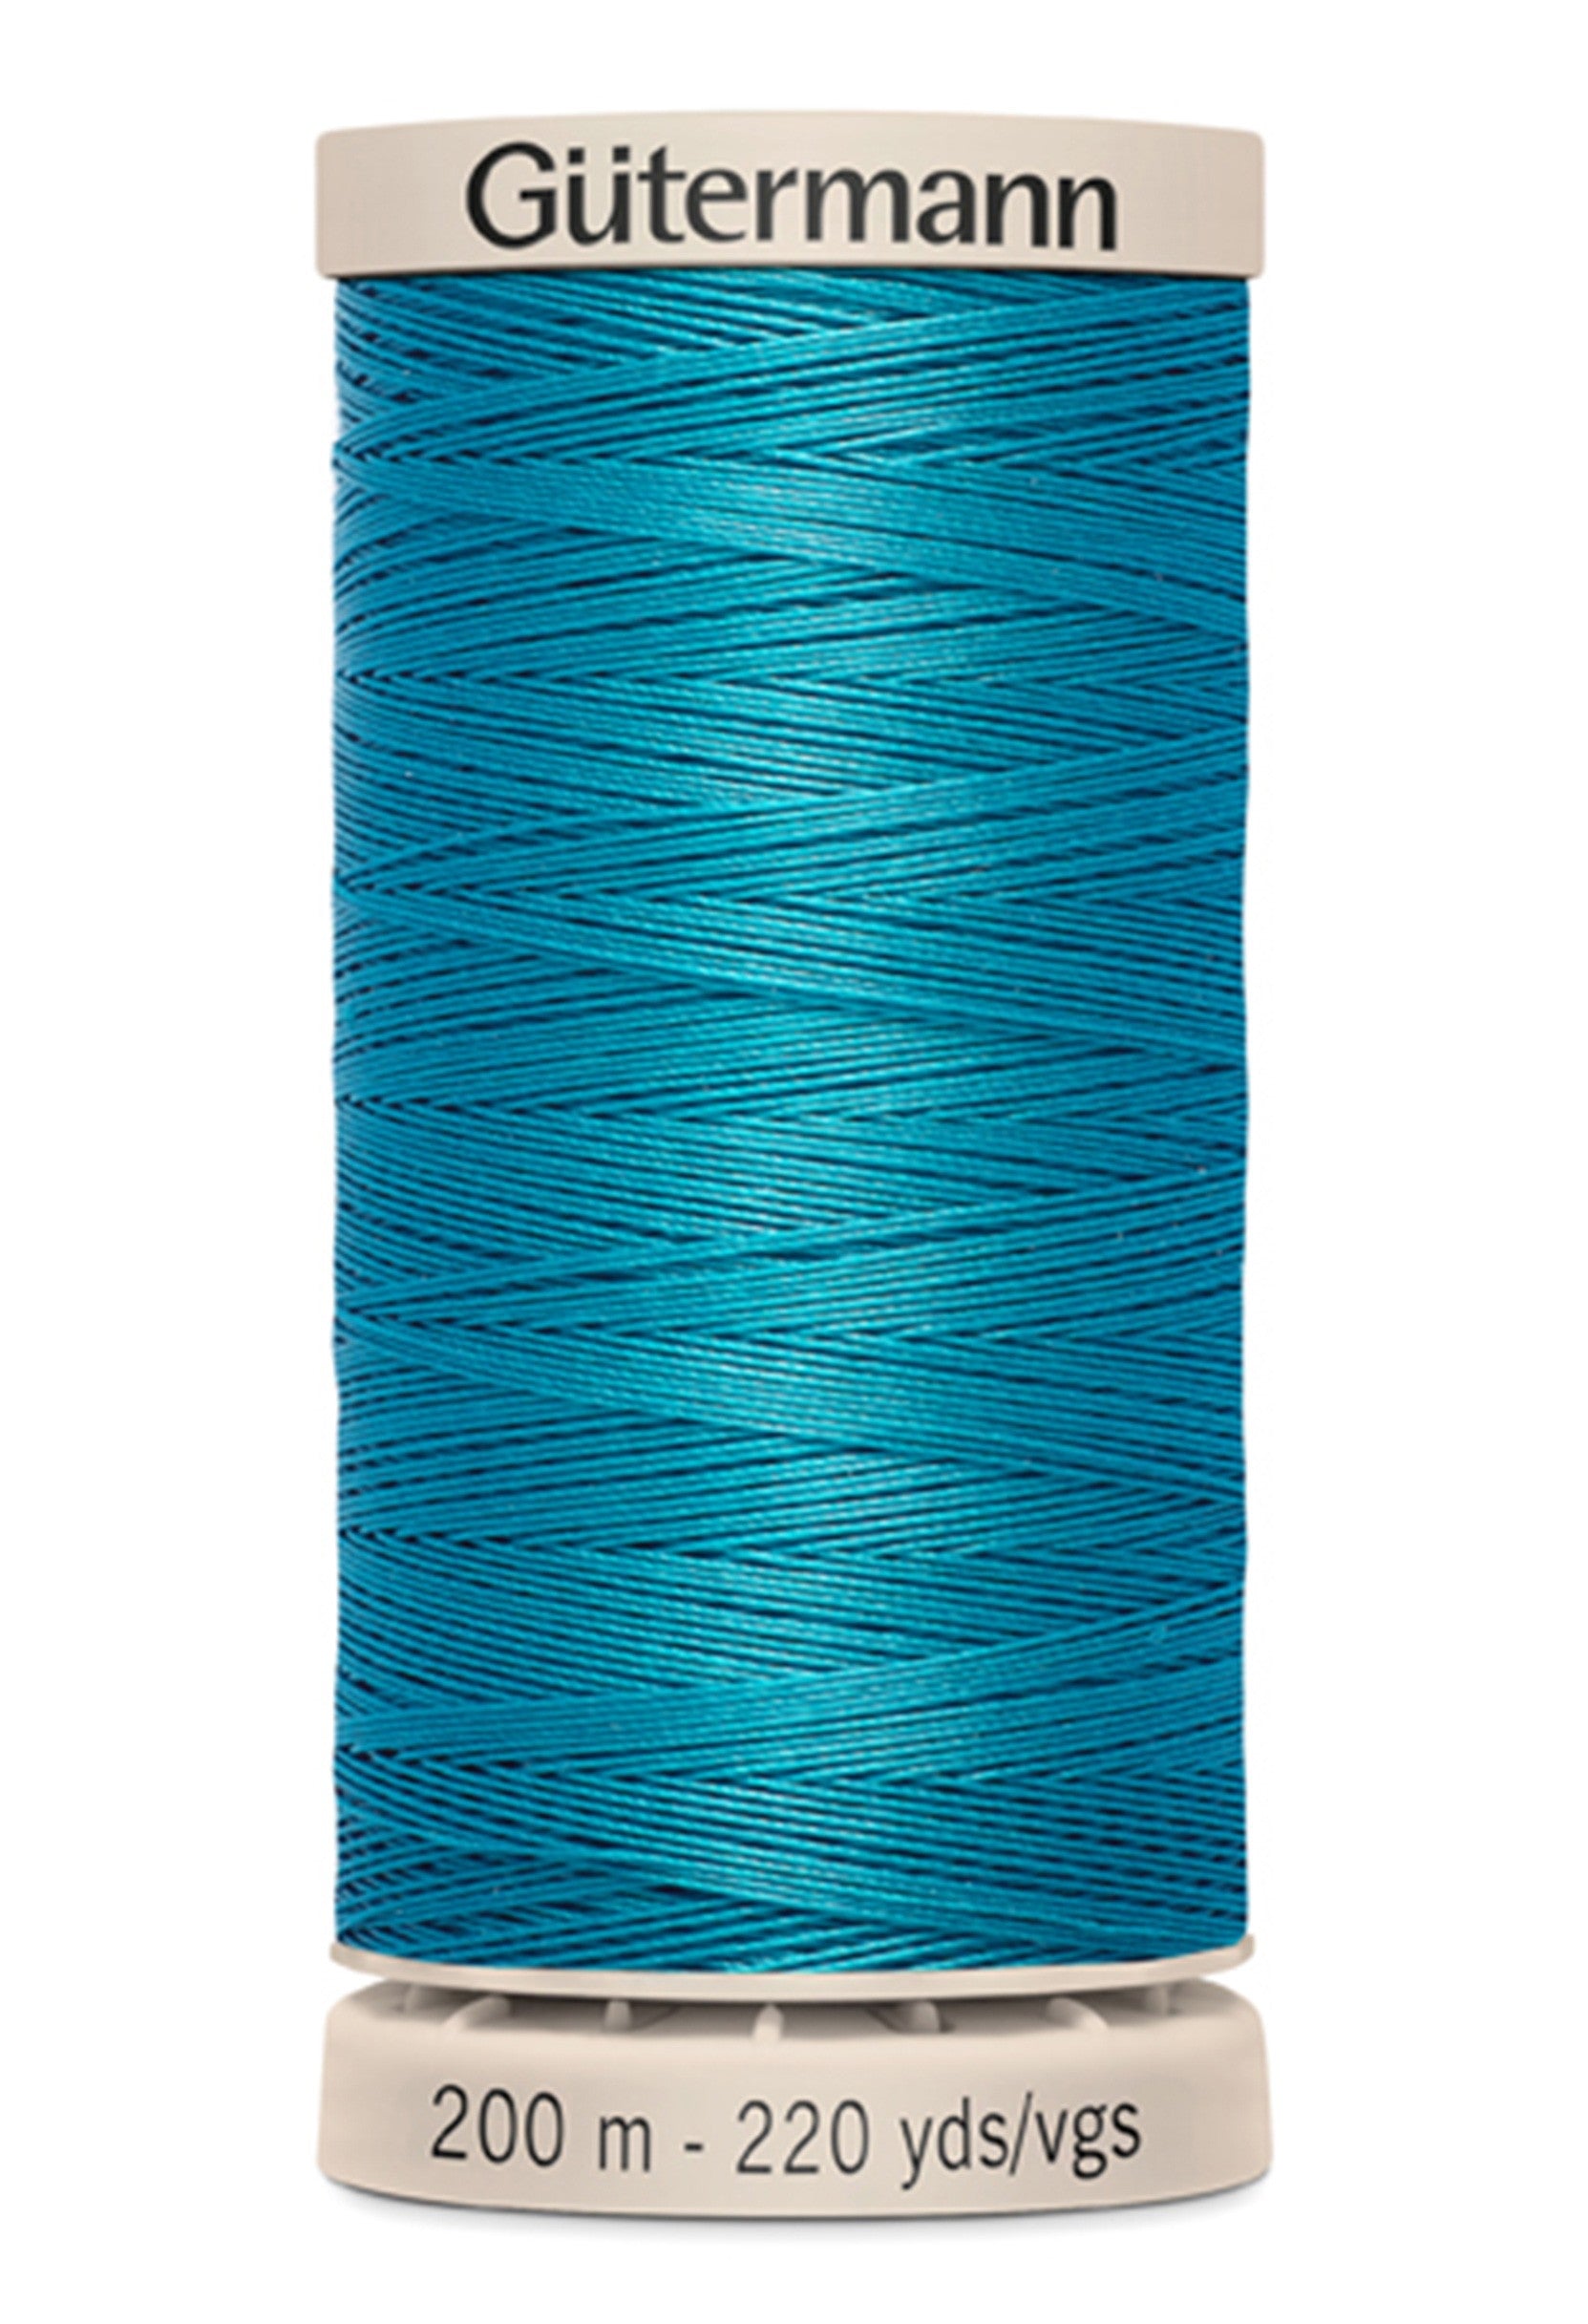 7550 Medium Turquoise 200m Gutermann Machine Embroidery Thread